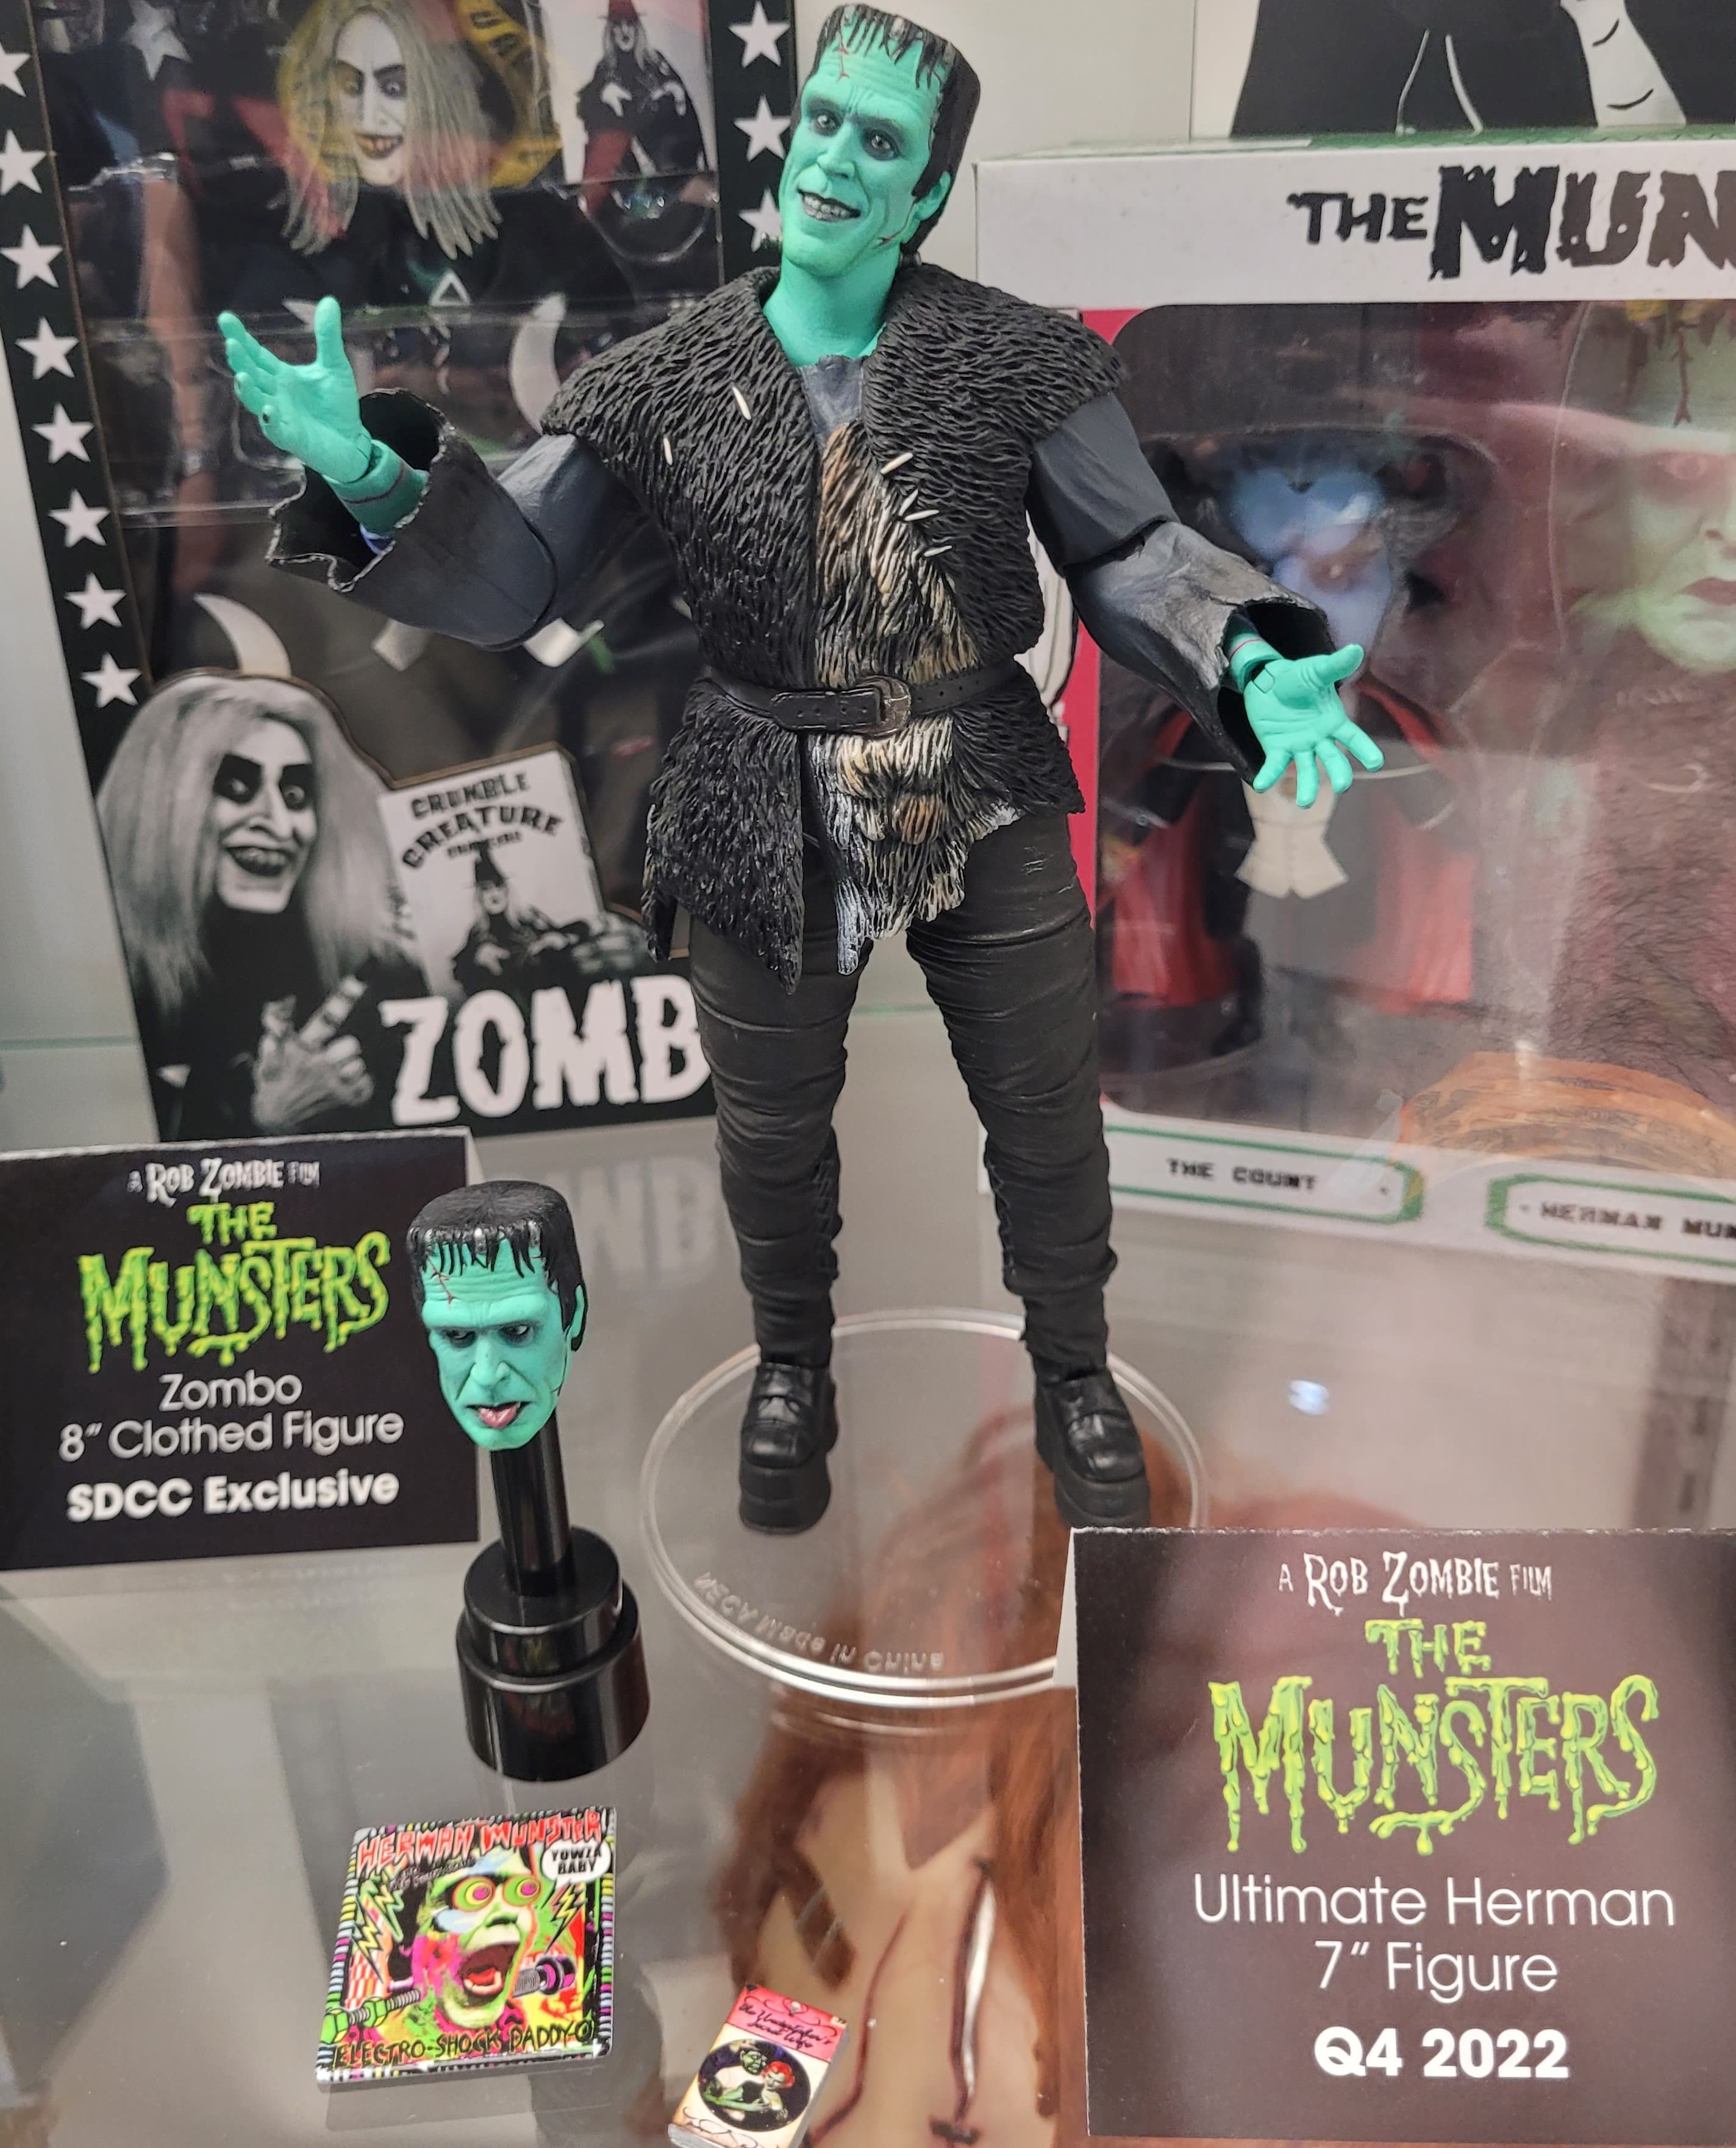 Rob Zombie's Herman Munster